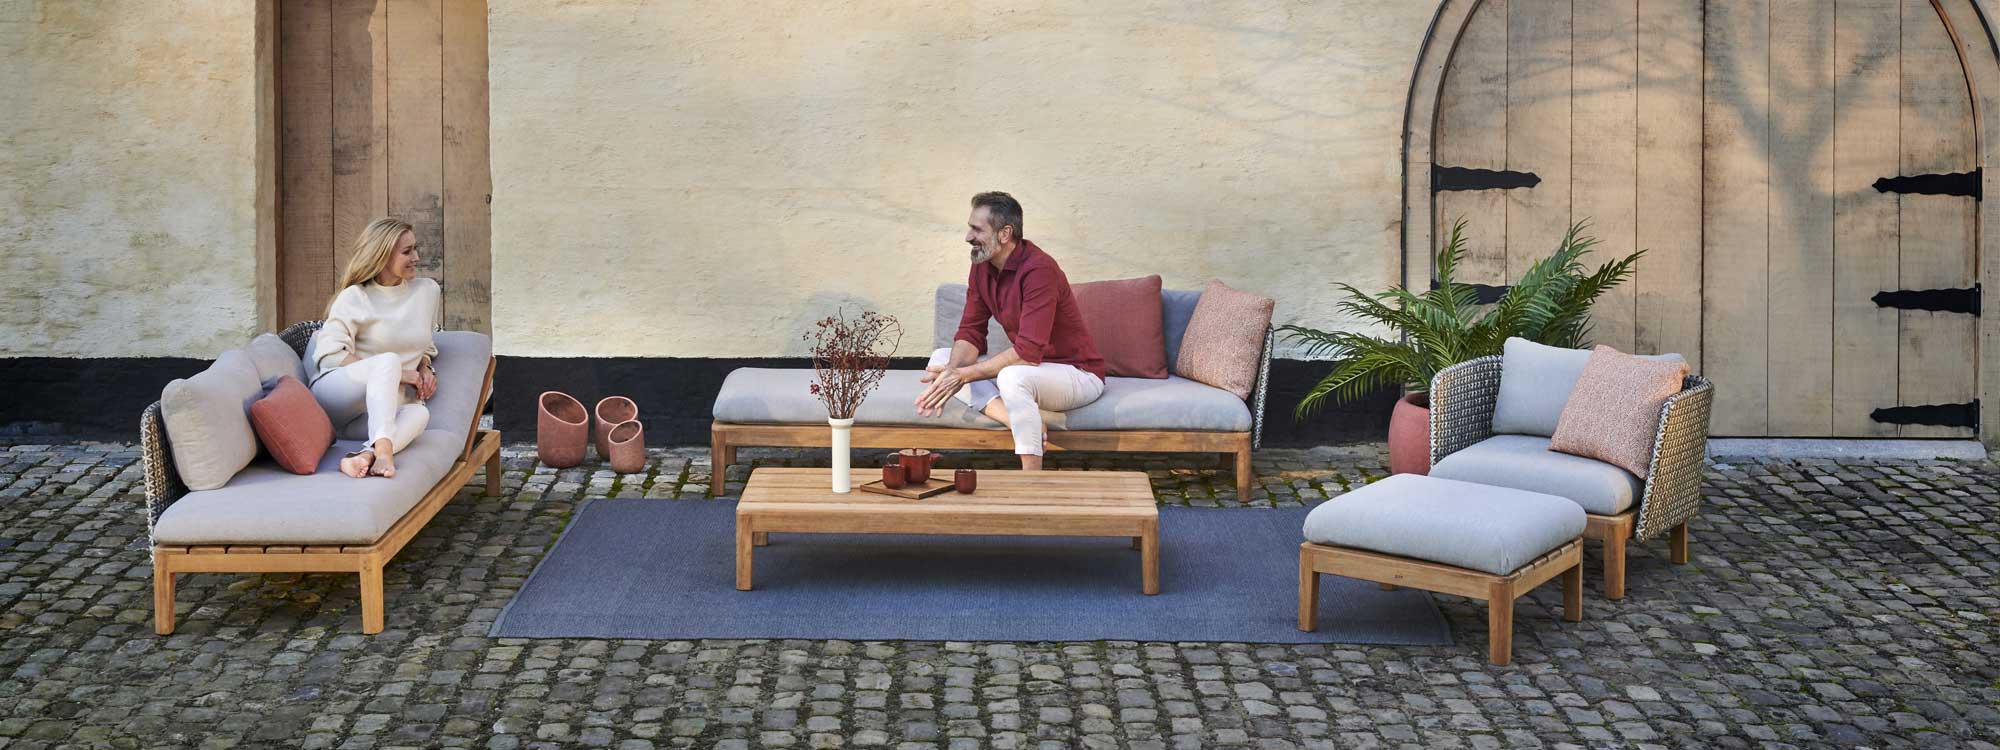 Calypso modular garden sofa is modern teak lounge furniture in finest quality garden furniture materials by Royal Botania furniture